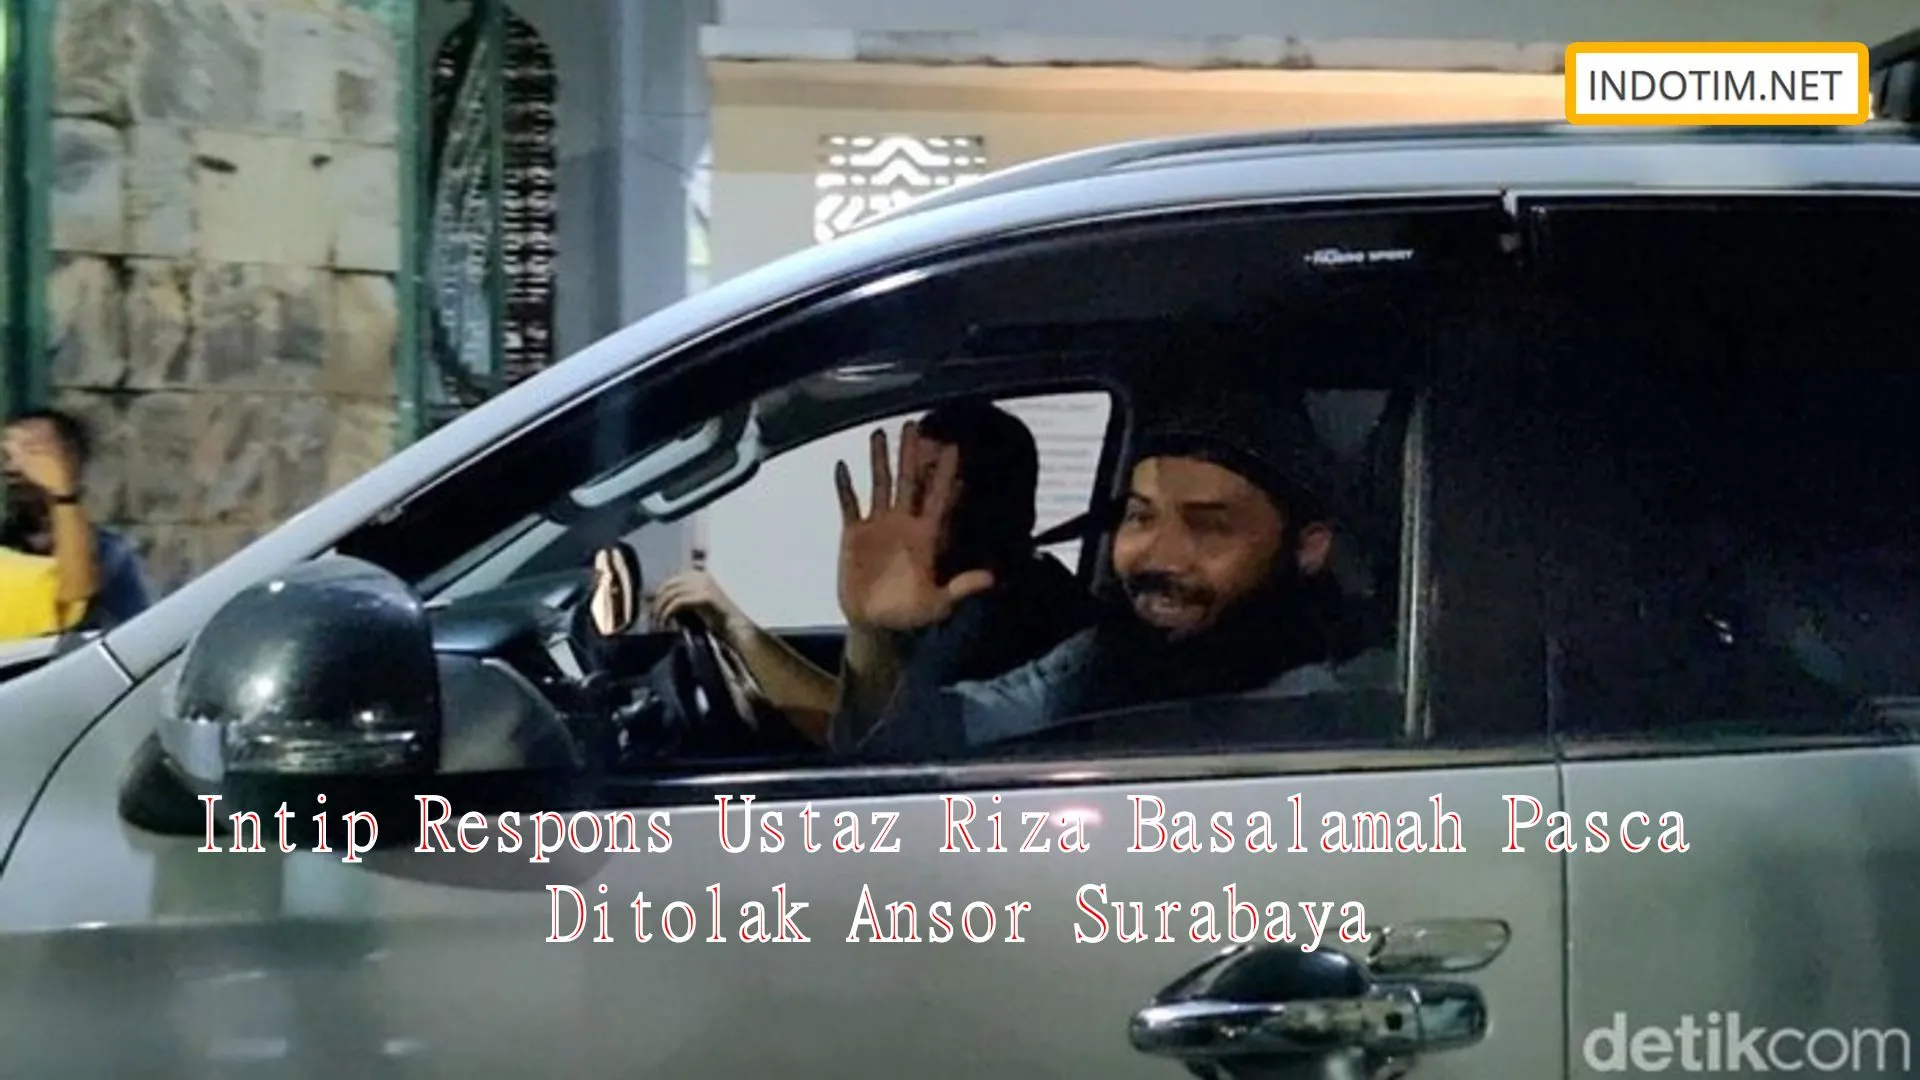 Intip Respons Ustaz Riza Basalamah Pasca Ditolak Ansor Surabaya